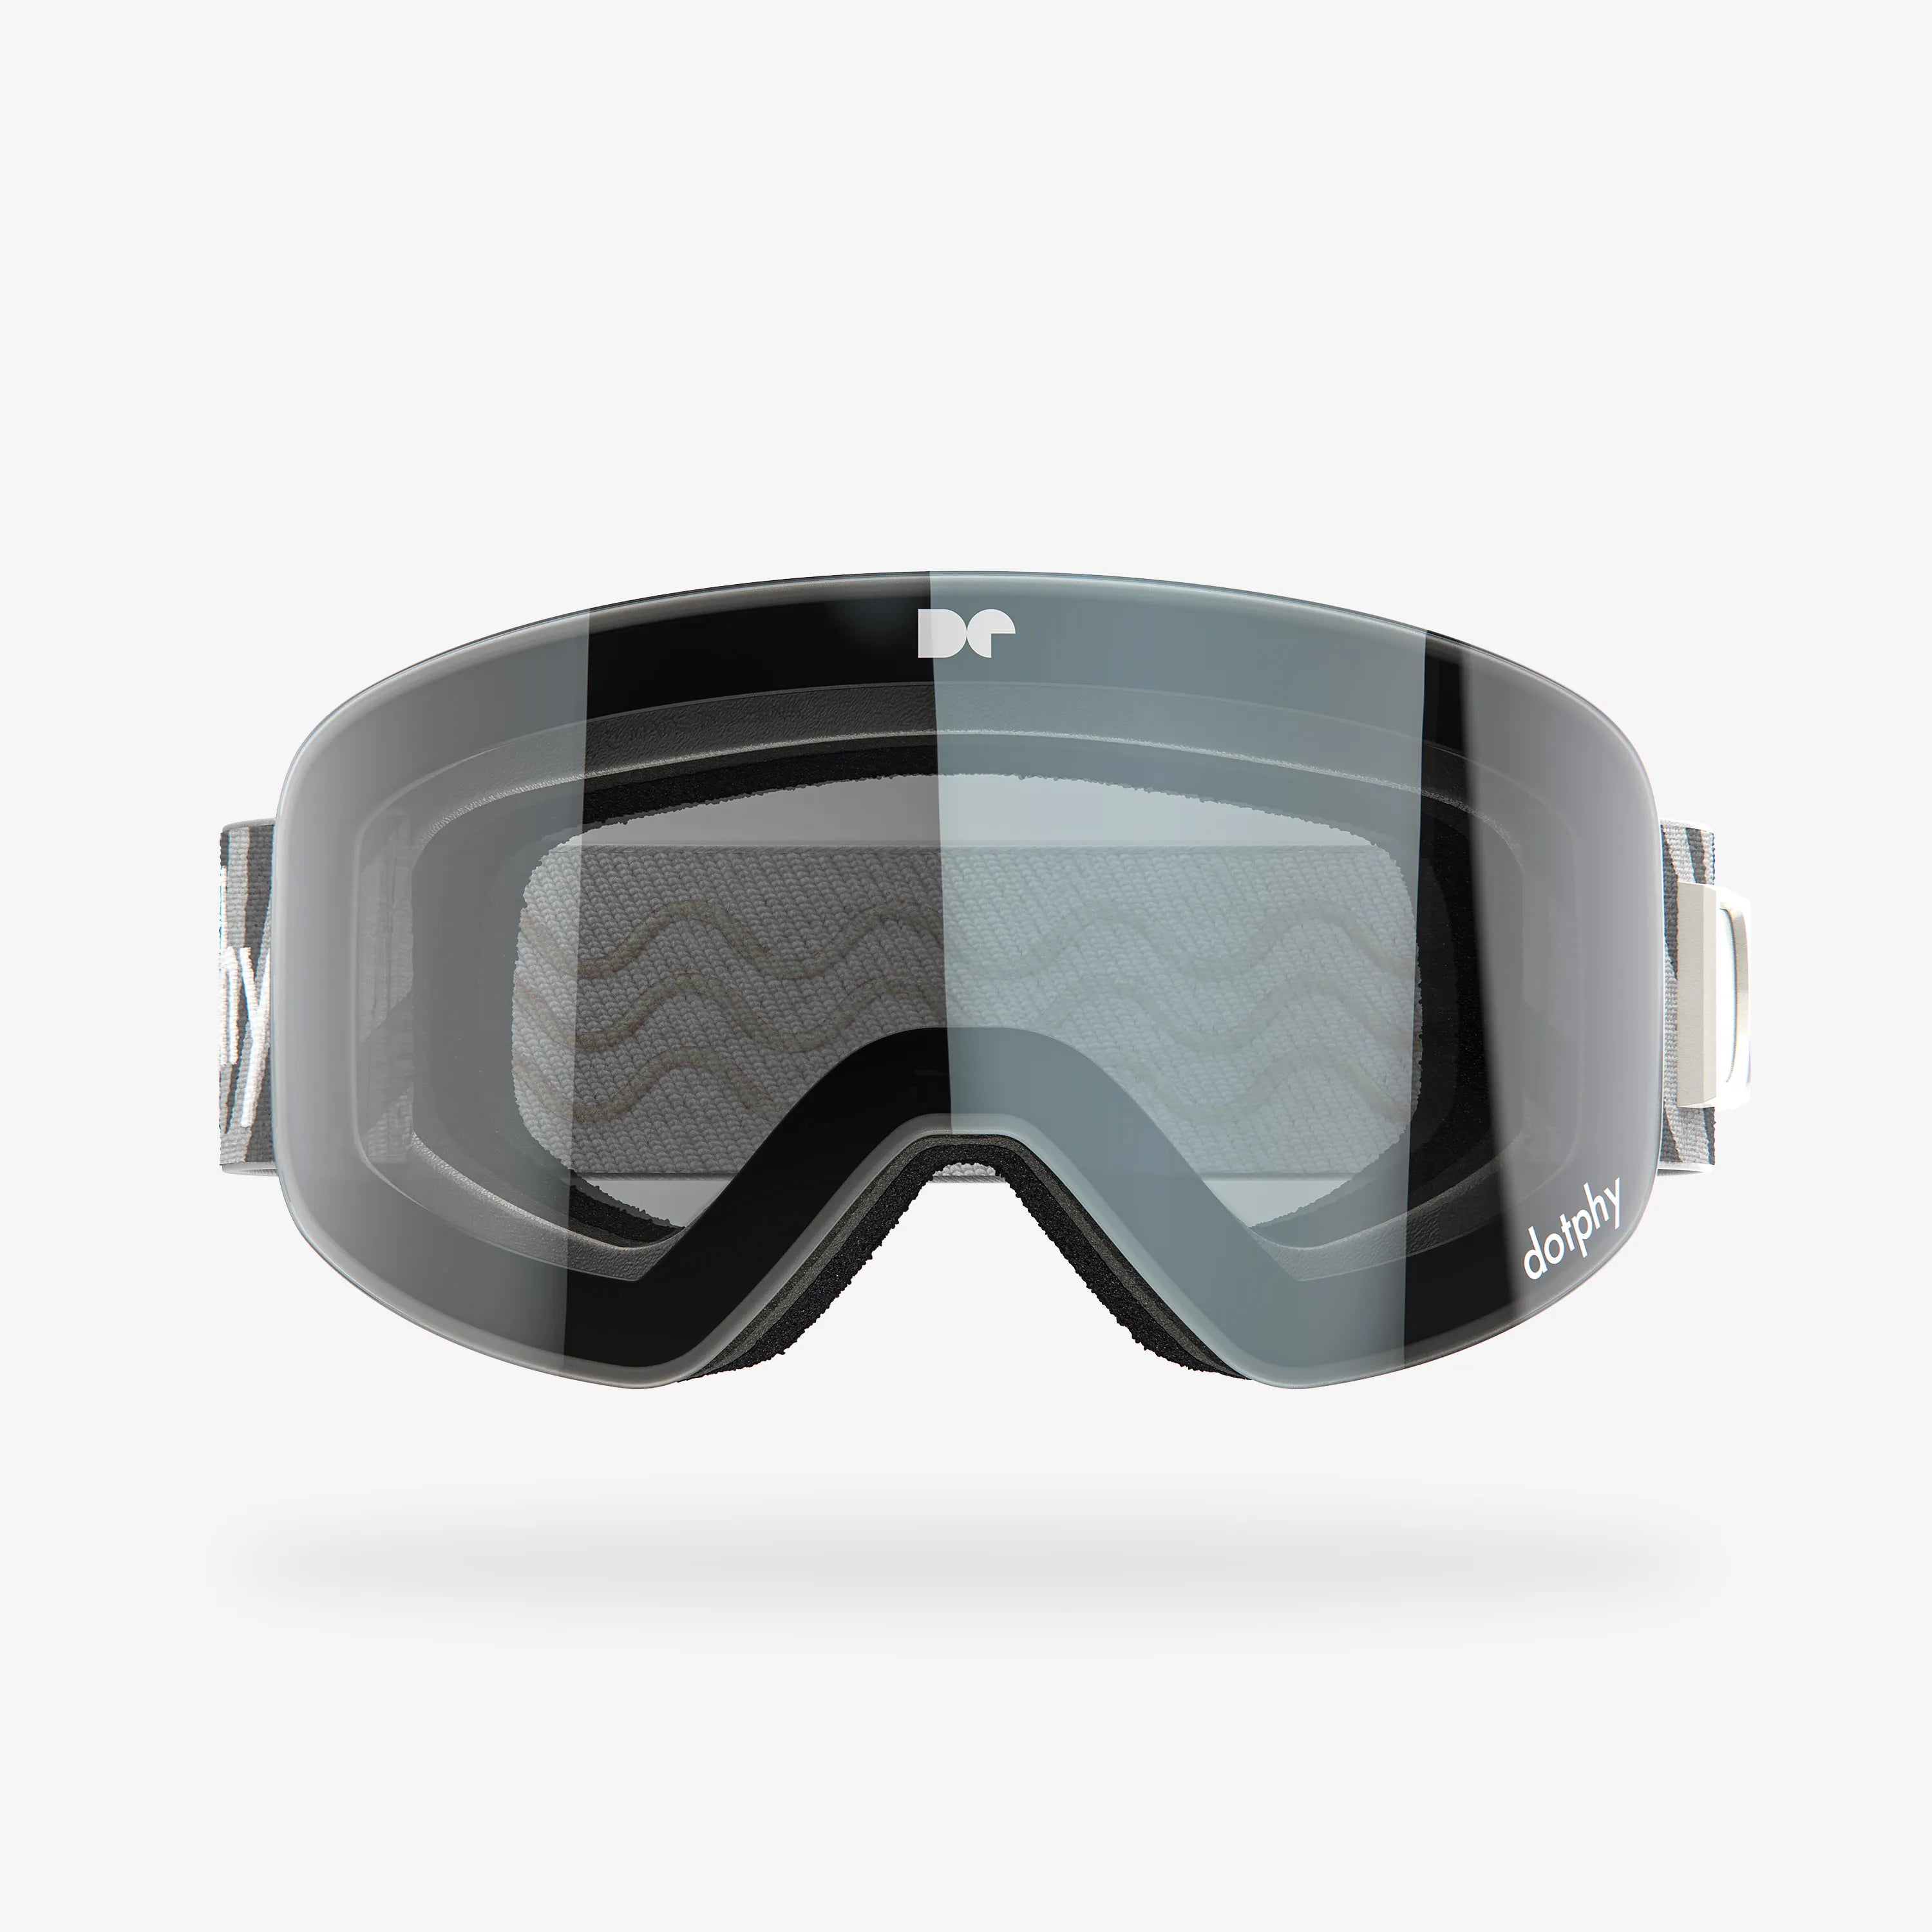 Defender 1000 Shadow Ski Goggle